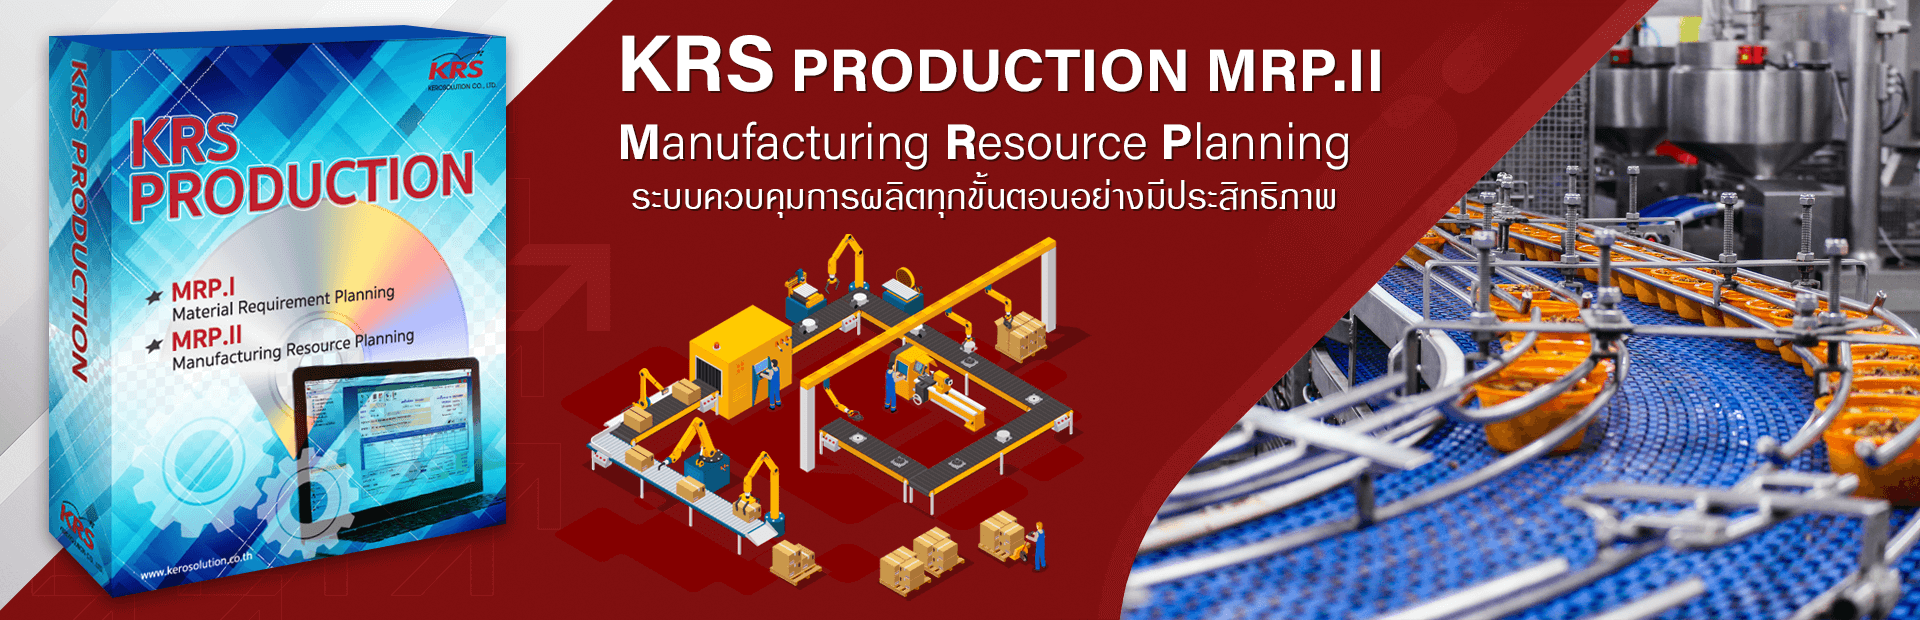 KRS PRODUCTION MRP.II